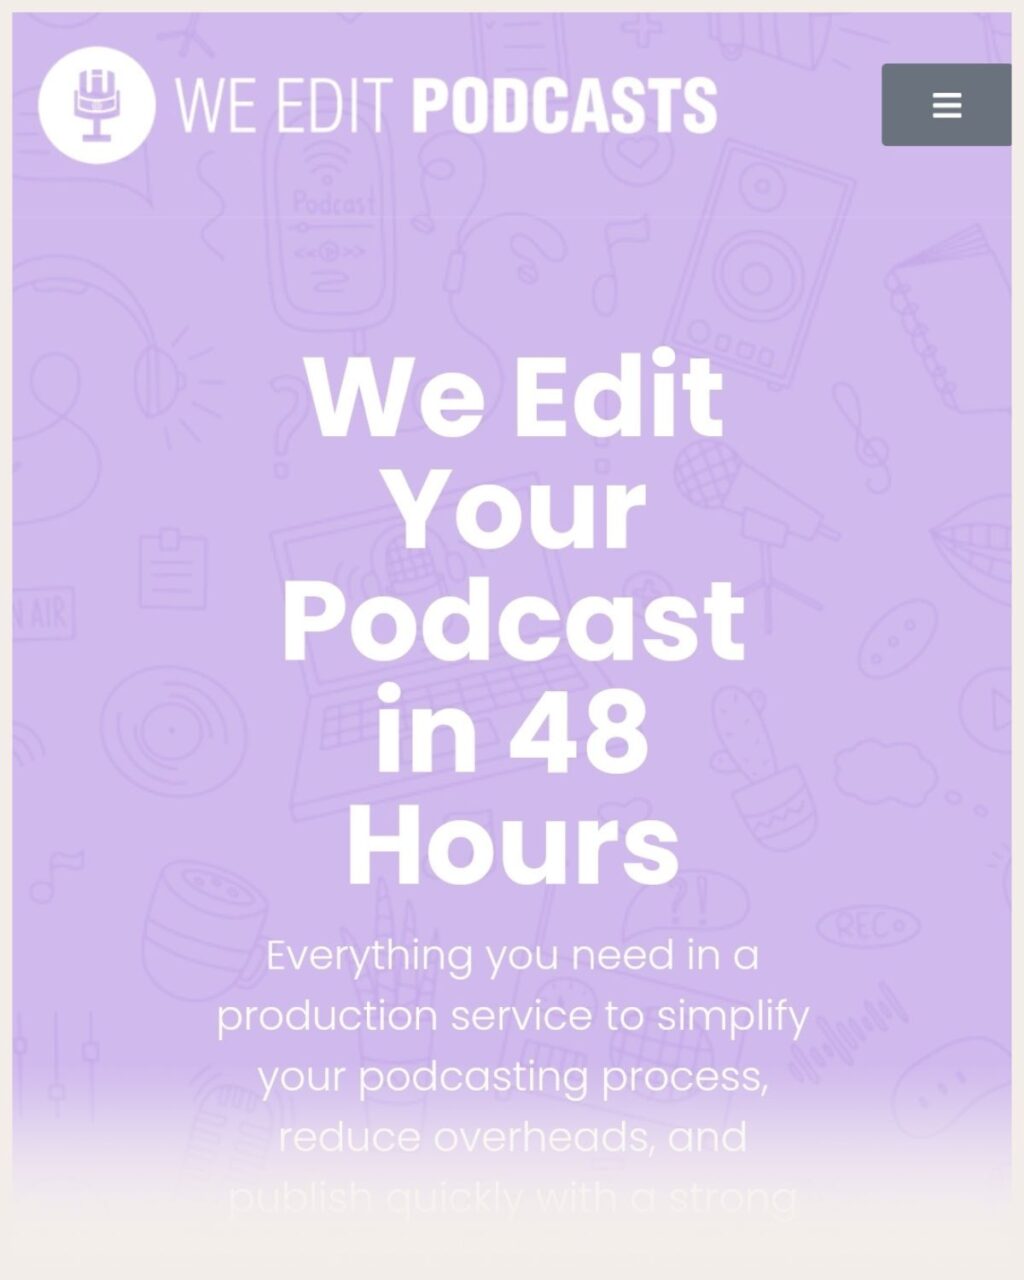 We Edit Podcasts website